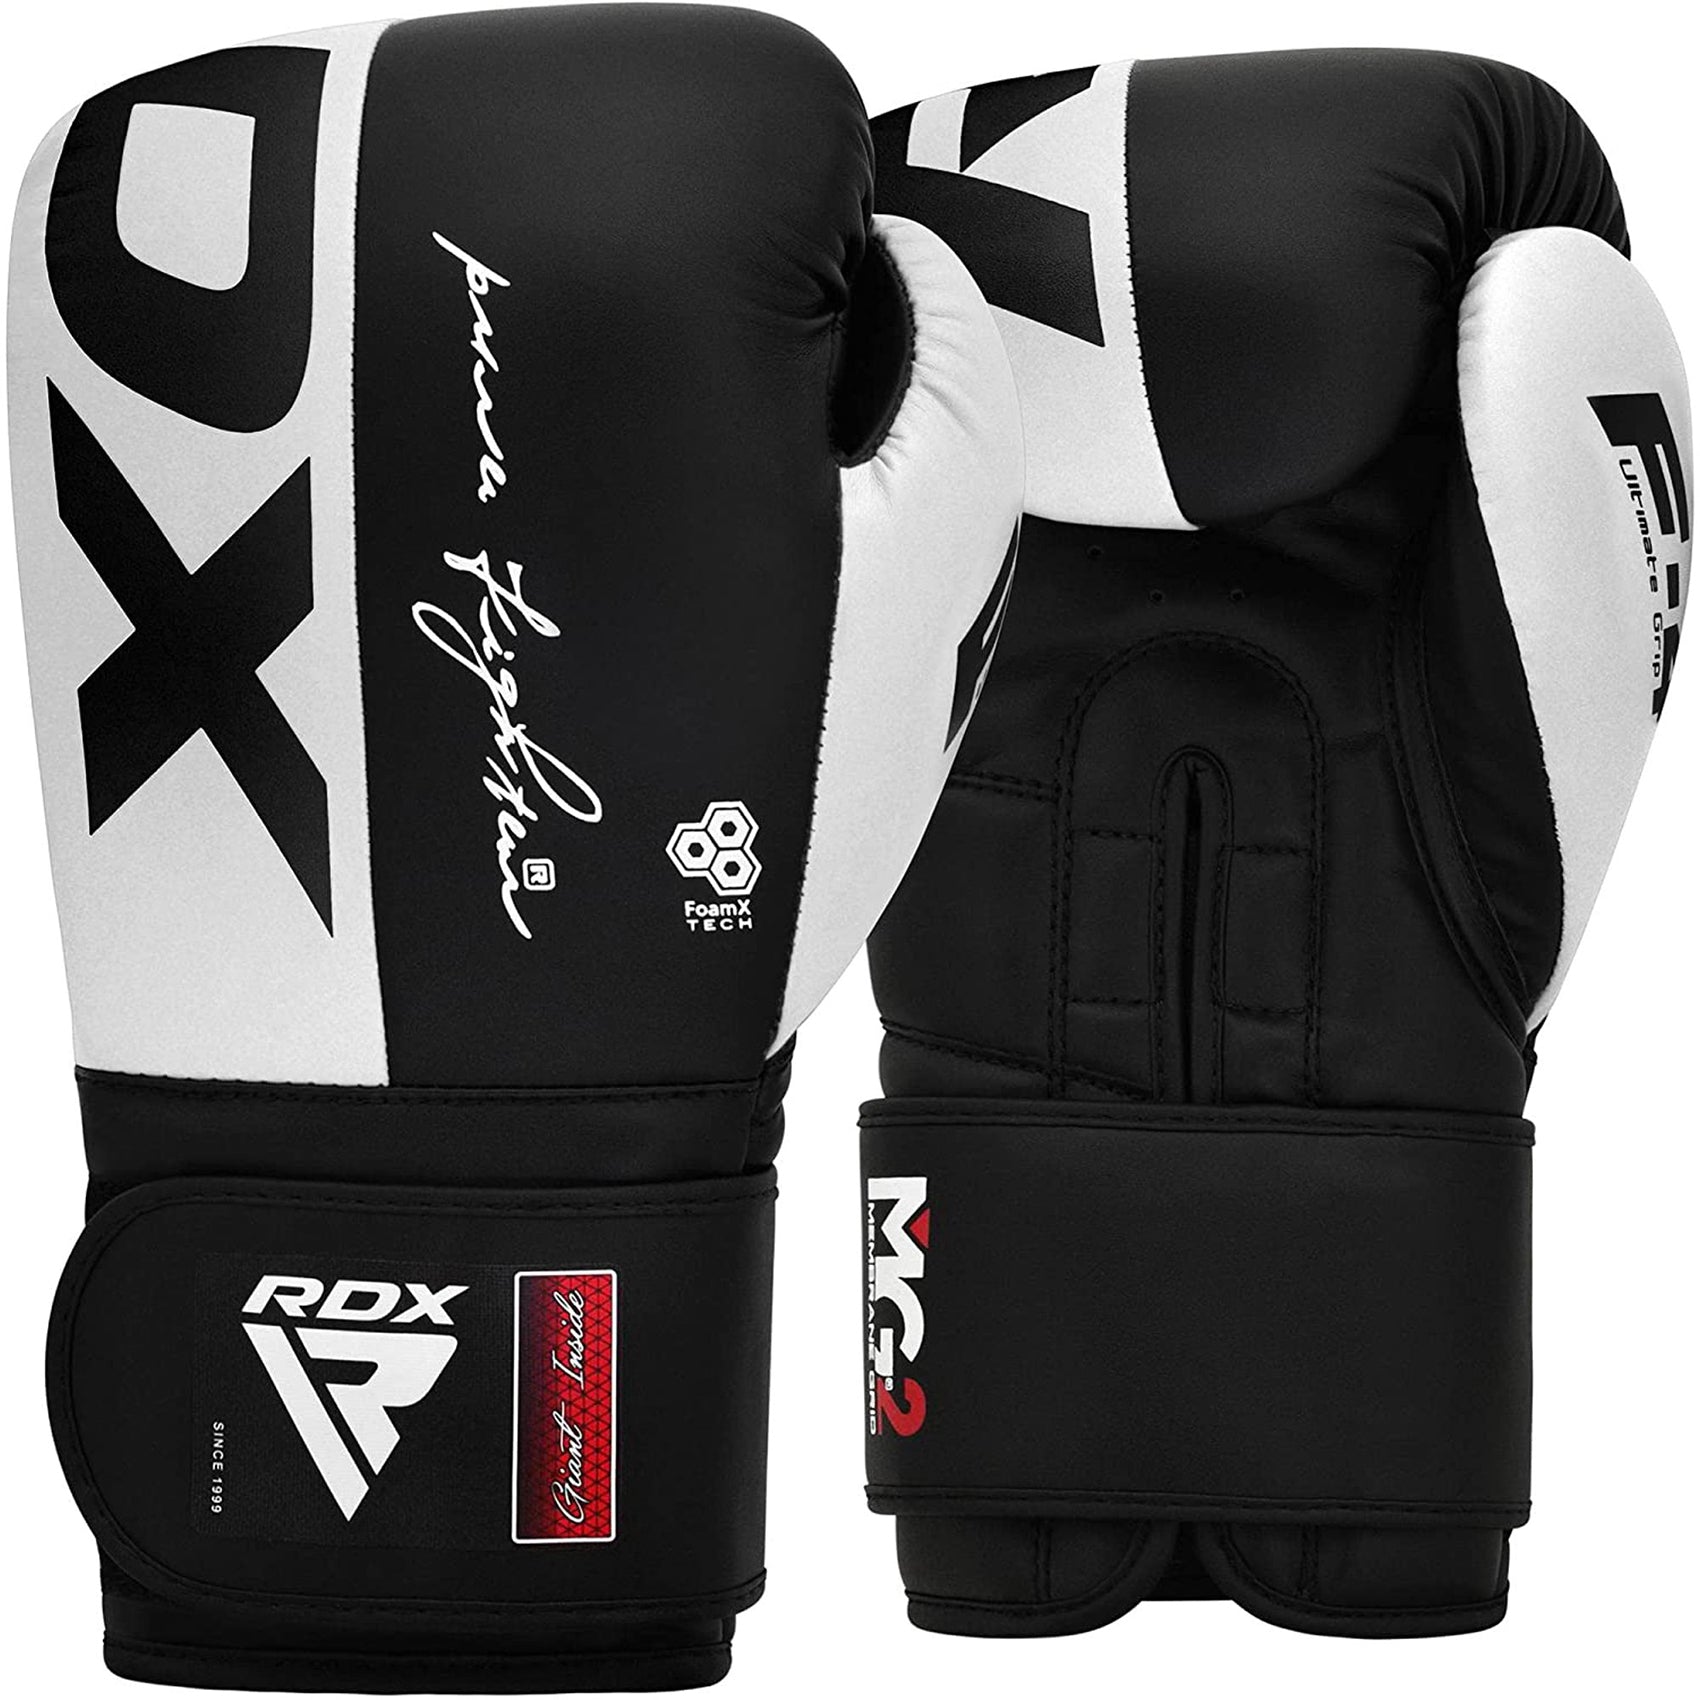 RDX REX F4 MMA, BJJ, Muay Thai, Kickboxing, Training Boxing Gloves - WHITE/BLACK - 16oz - Pro-Distributing